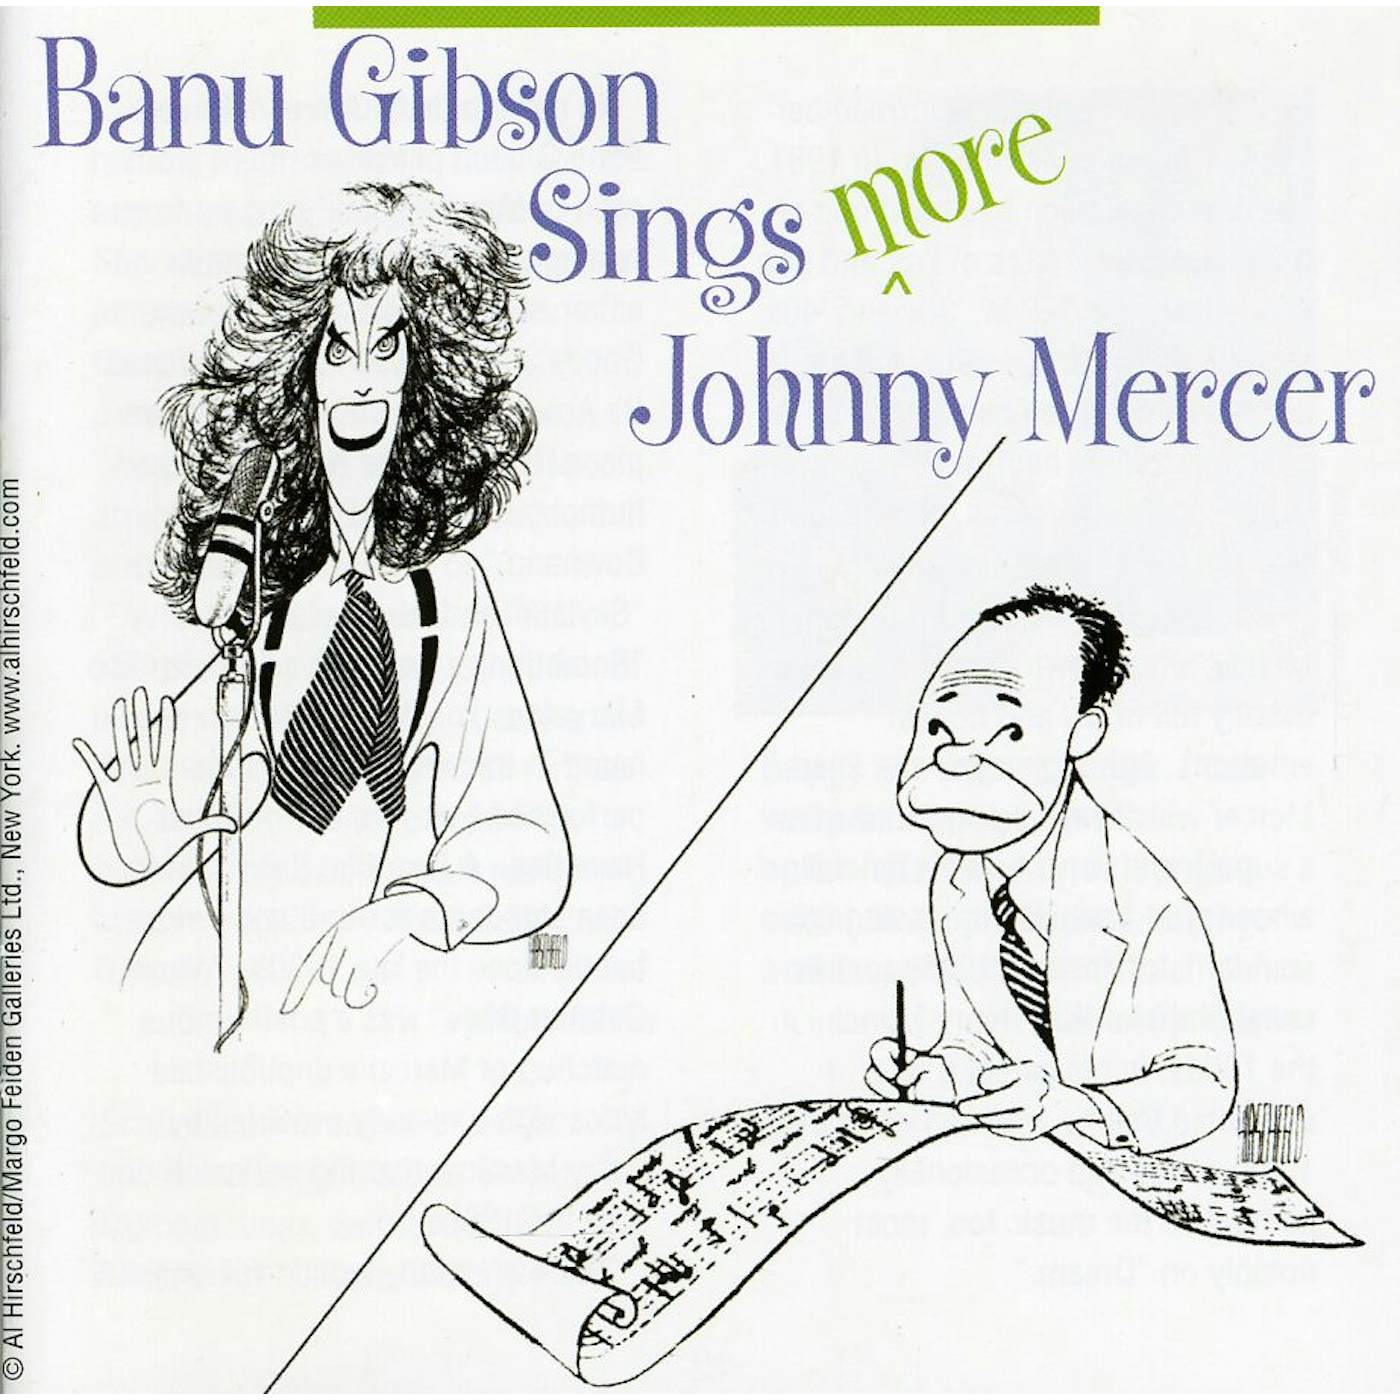 BANU GIBSON SINGS MORE JOHNNY CD